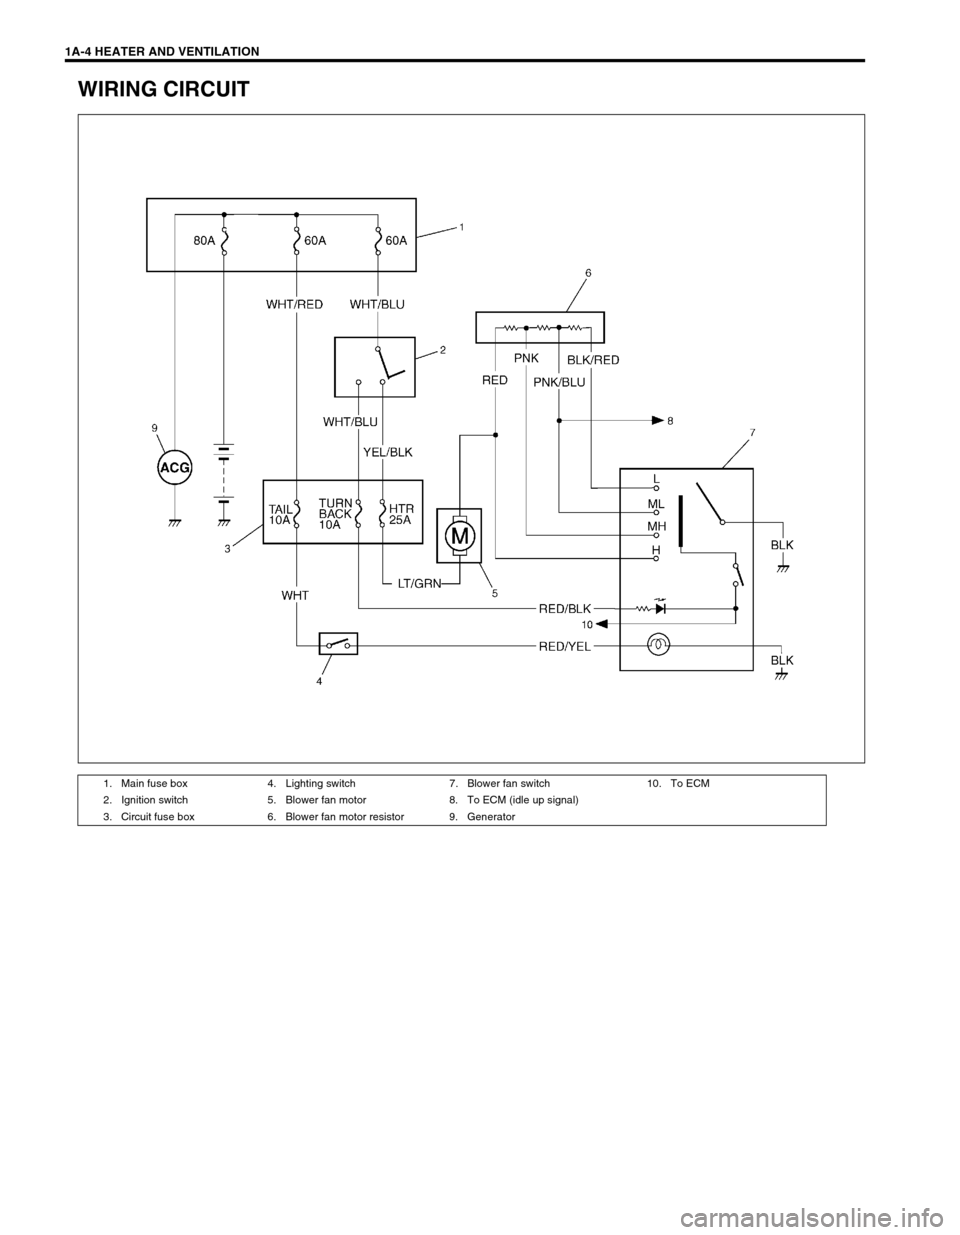 SUZUKI SWIFT 2000 1.G RG413 Service Workshop Manual 1A-4 HEATER AND VENTILATION
WIRING CIRCUIT
1. Main fuse box 4. Lighting switch 7. Blower fan switch 10. To ECM
2. Ignition switch 5. Blower fan motor 8. To ECM (idle up signal)
3. Circuit fuse box 6. 